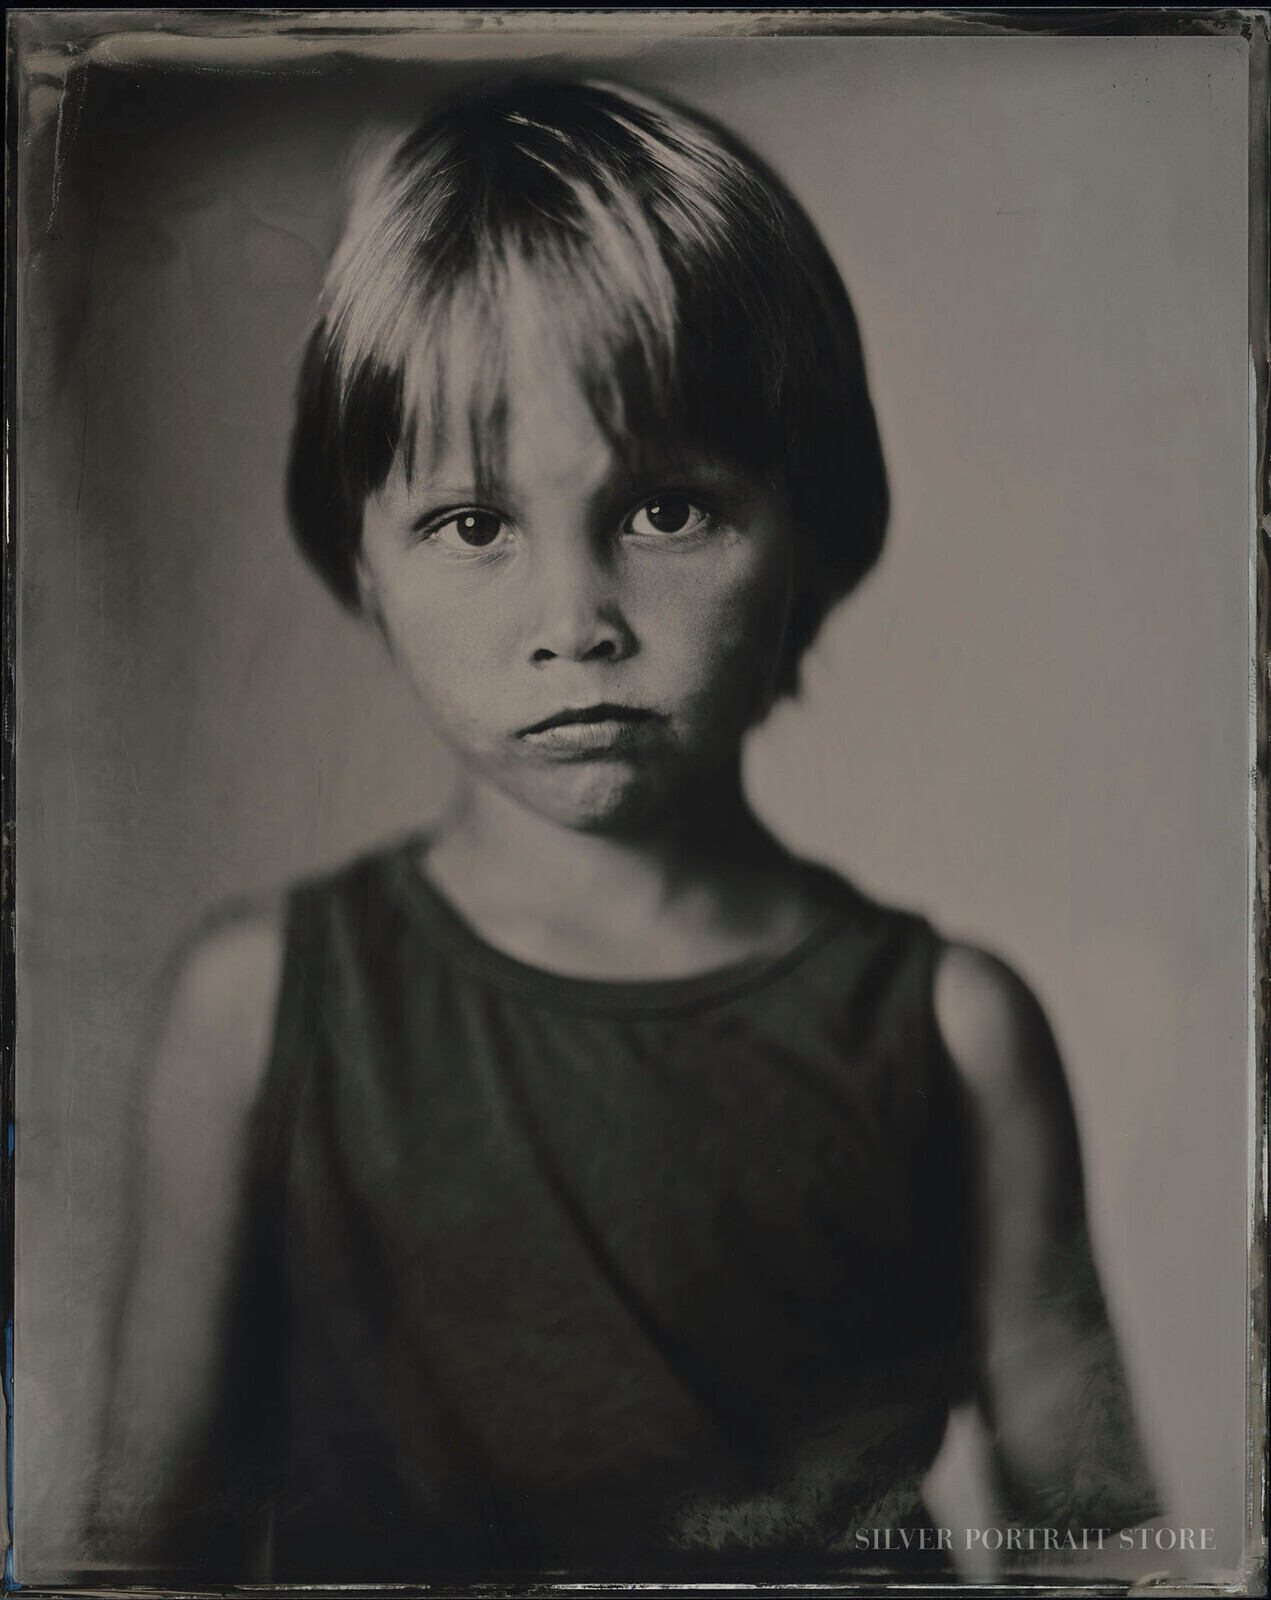 Julius-Silver Portrait Store-Wet plate collodion-Tintype 20 x 25 cm.